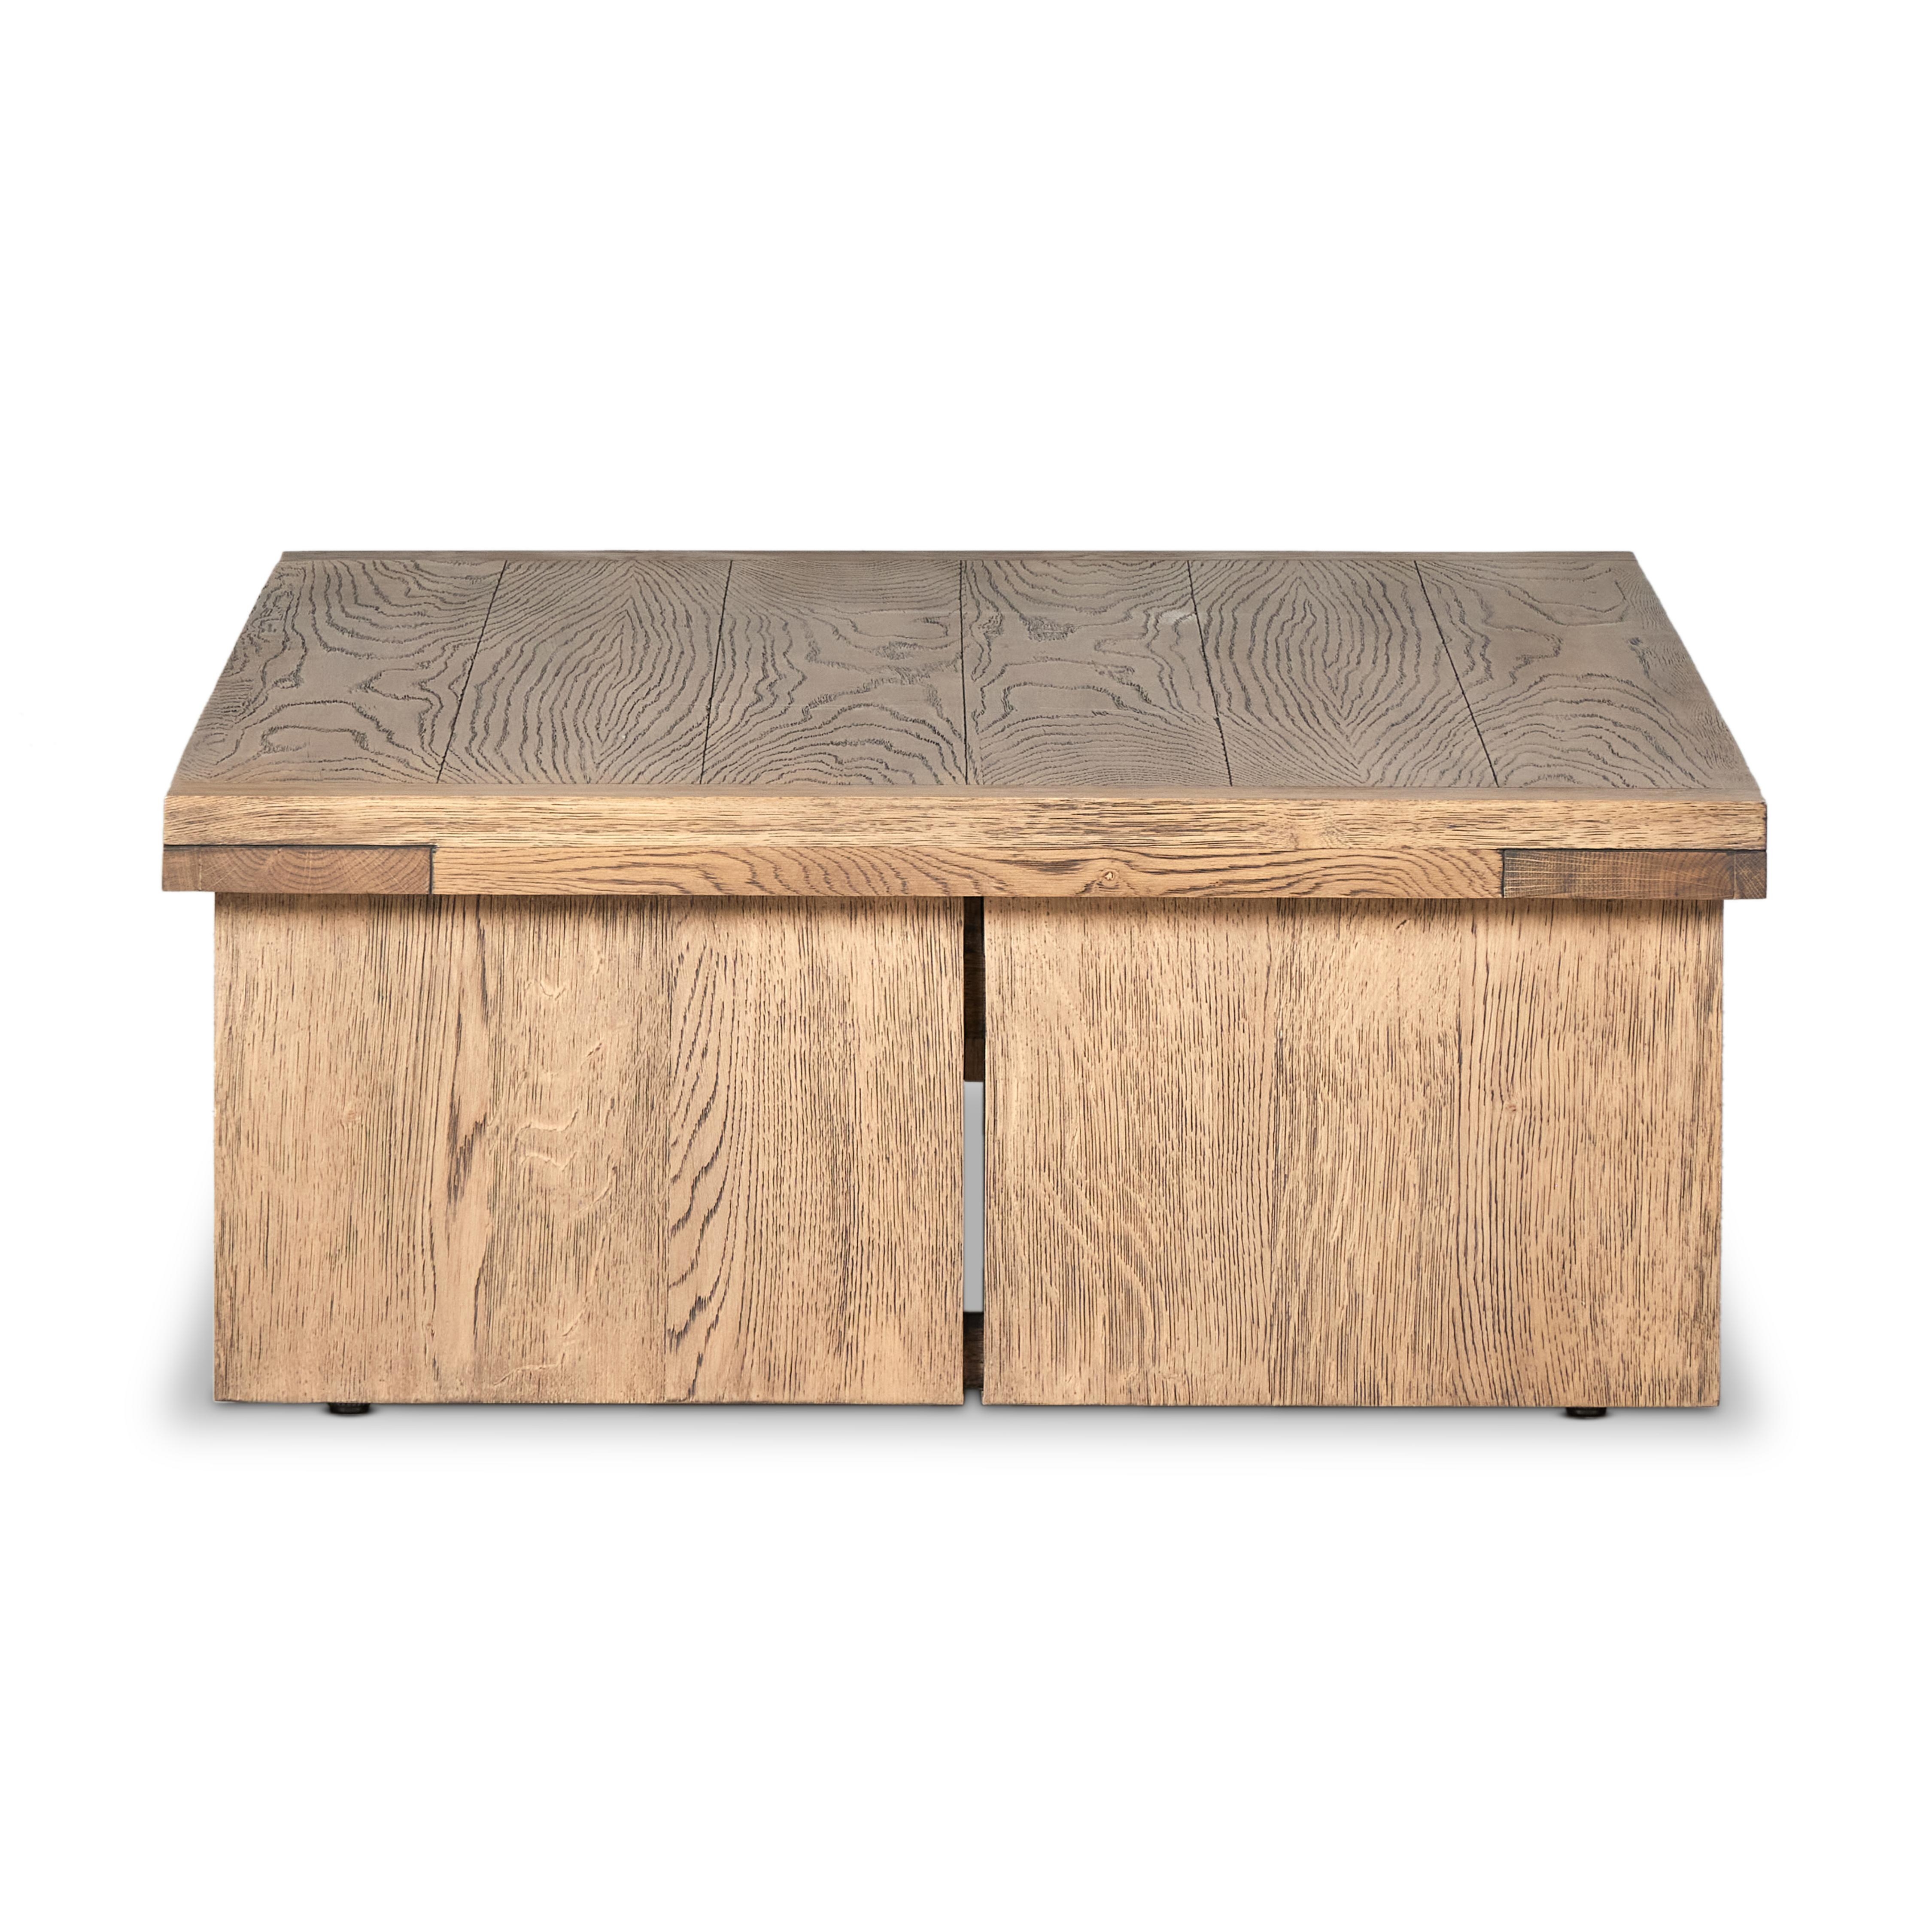 Warby Coffee Table-Worn Oak - Image 4